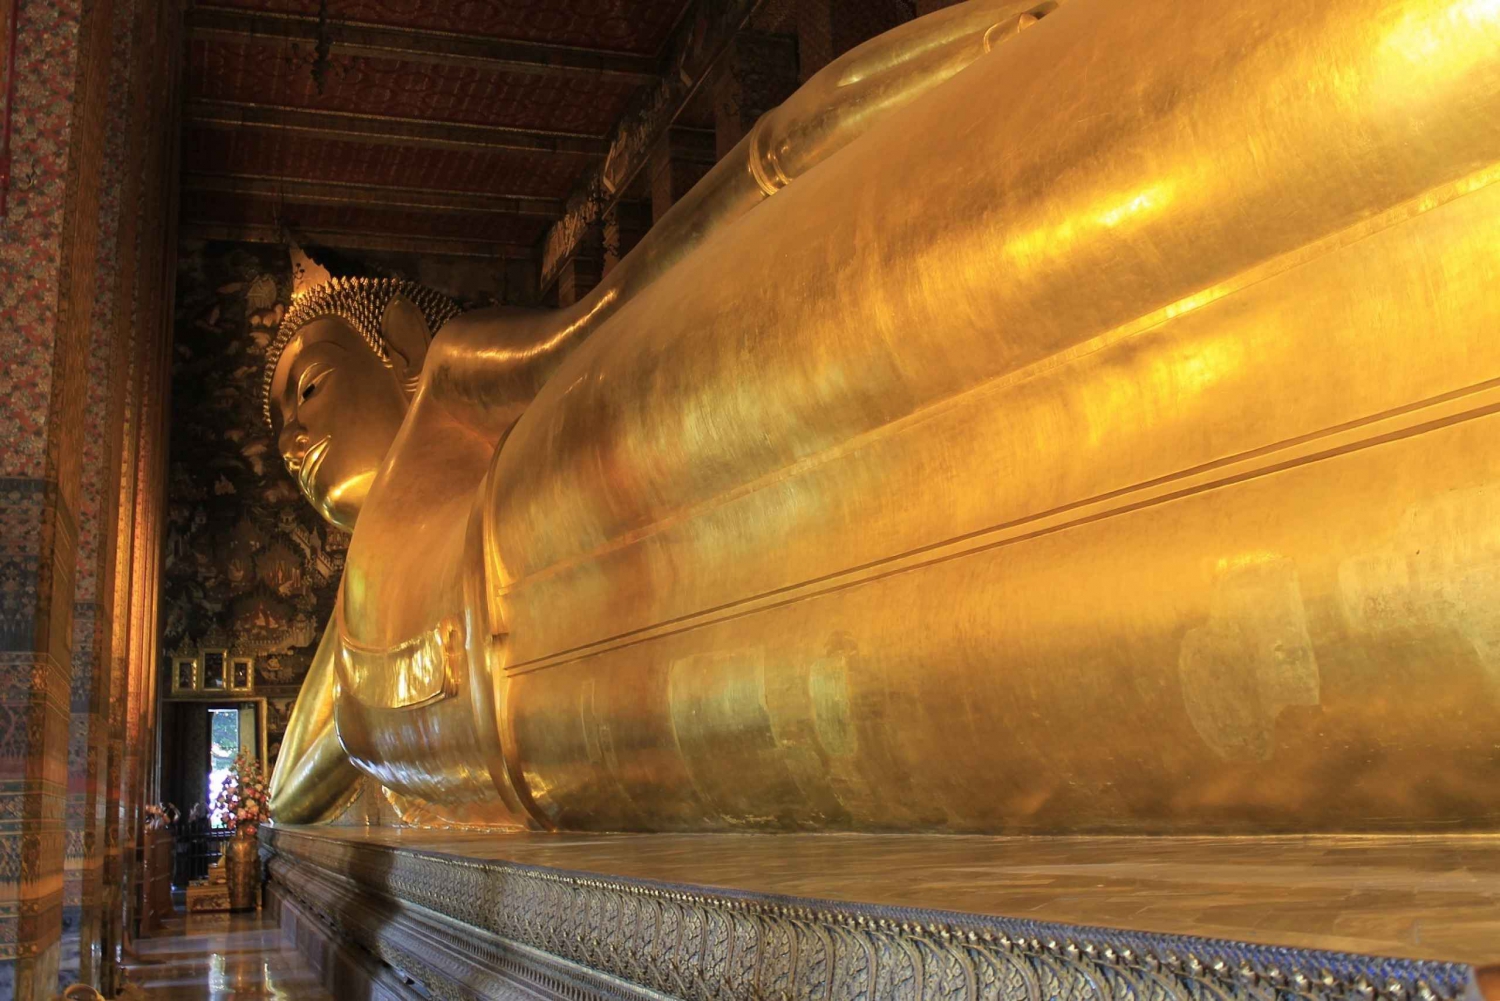 Wat Pho, Wat Arun and Wat Hong Rattanaram Private Tour